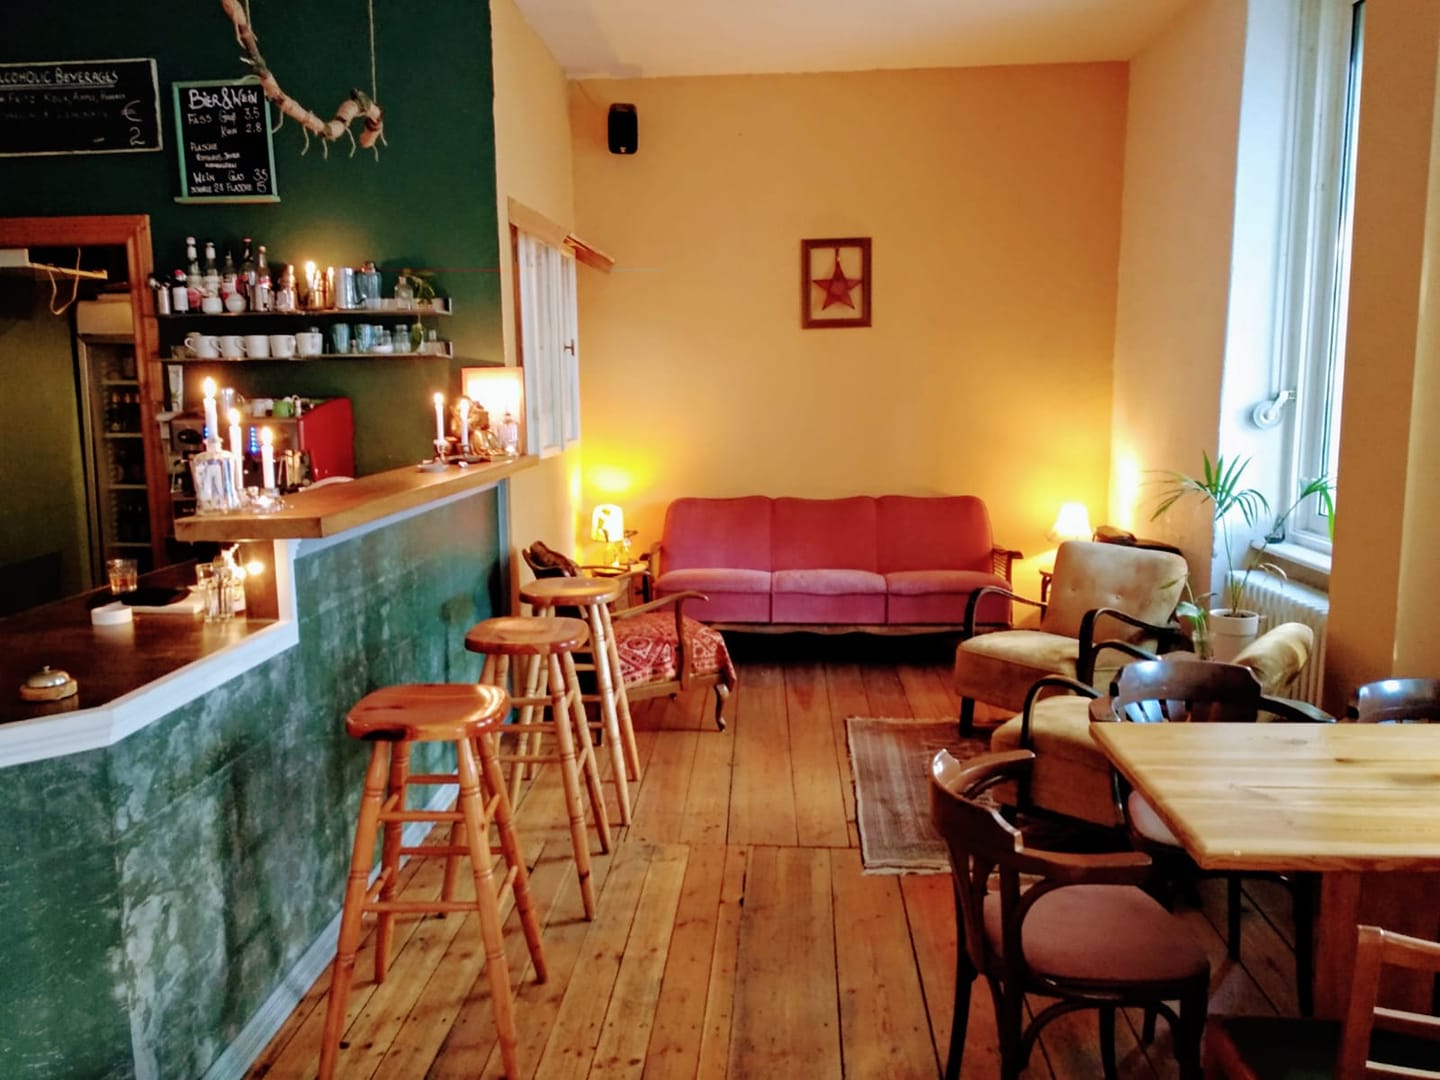 sehrwohl | Café & Bar